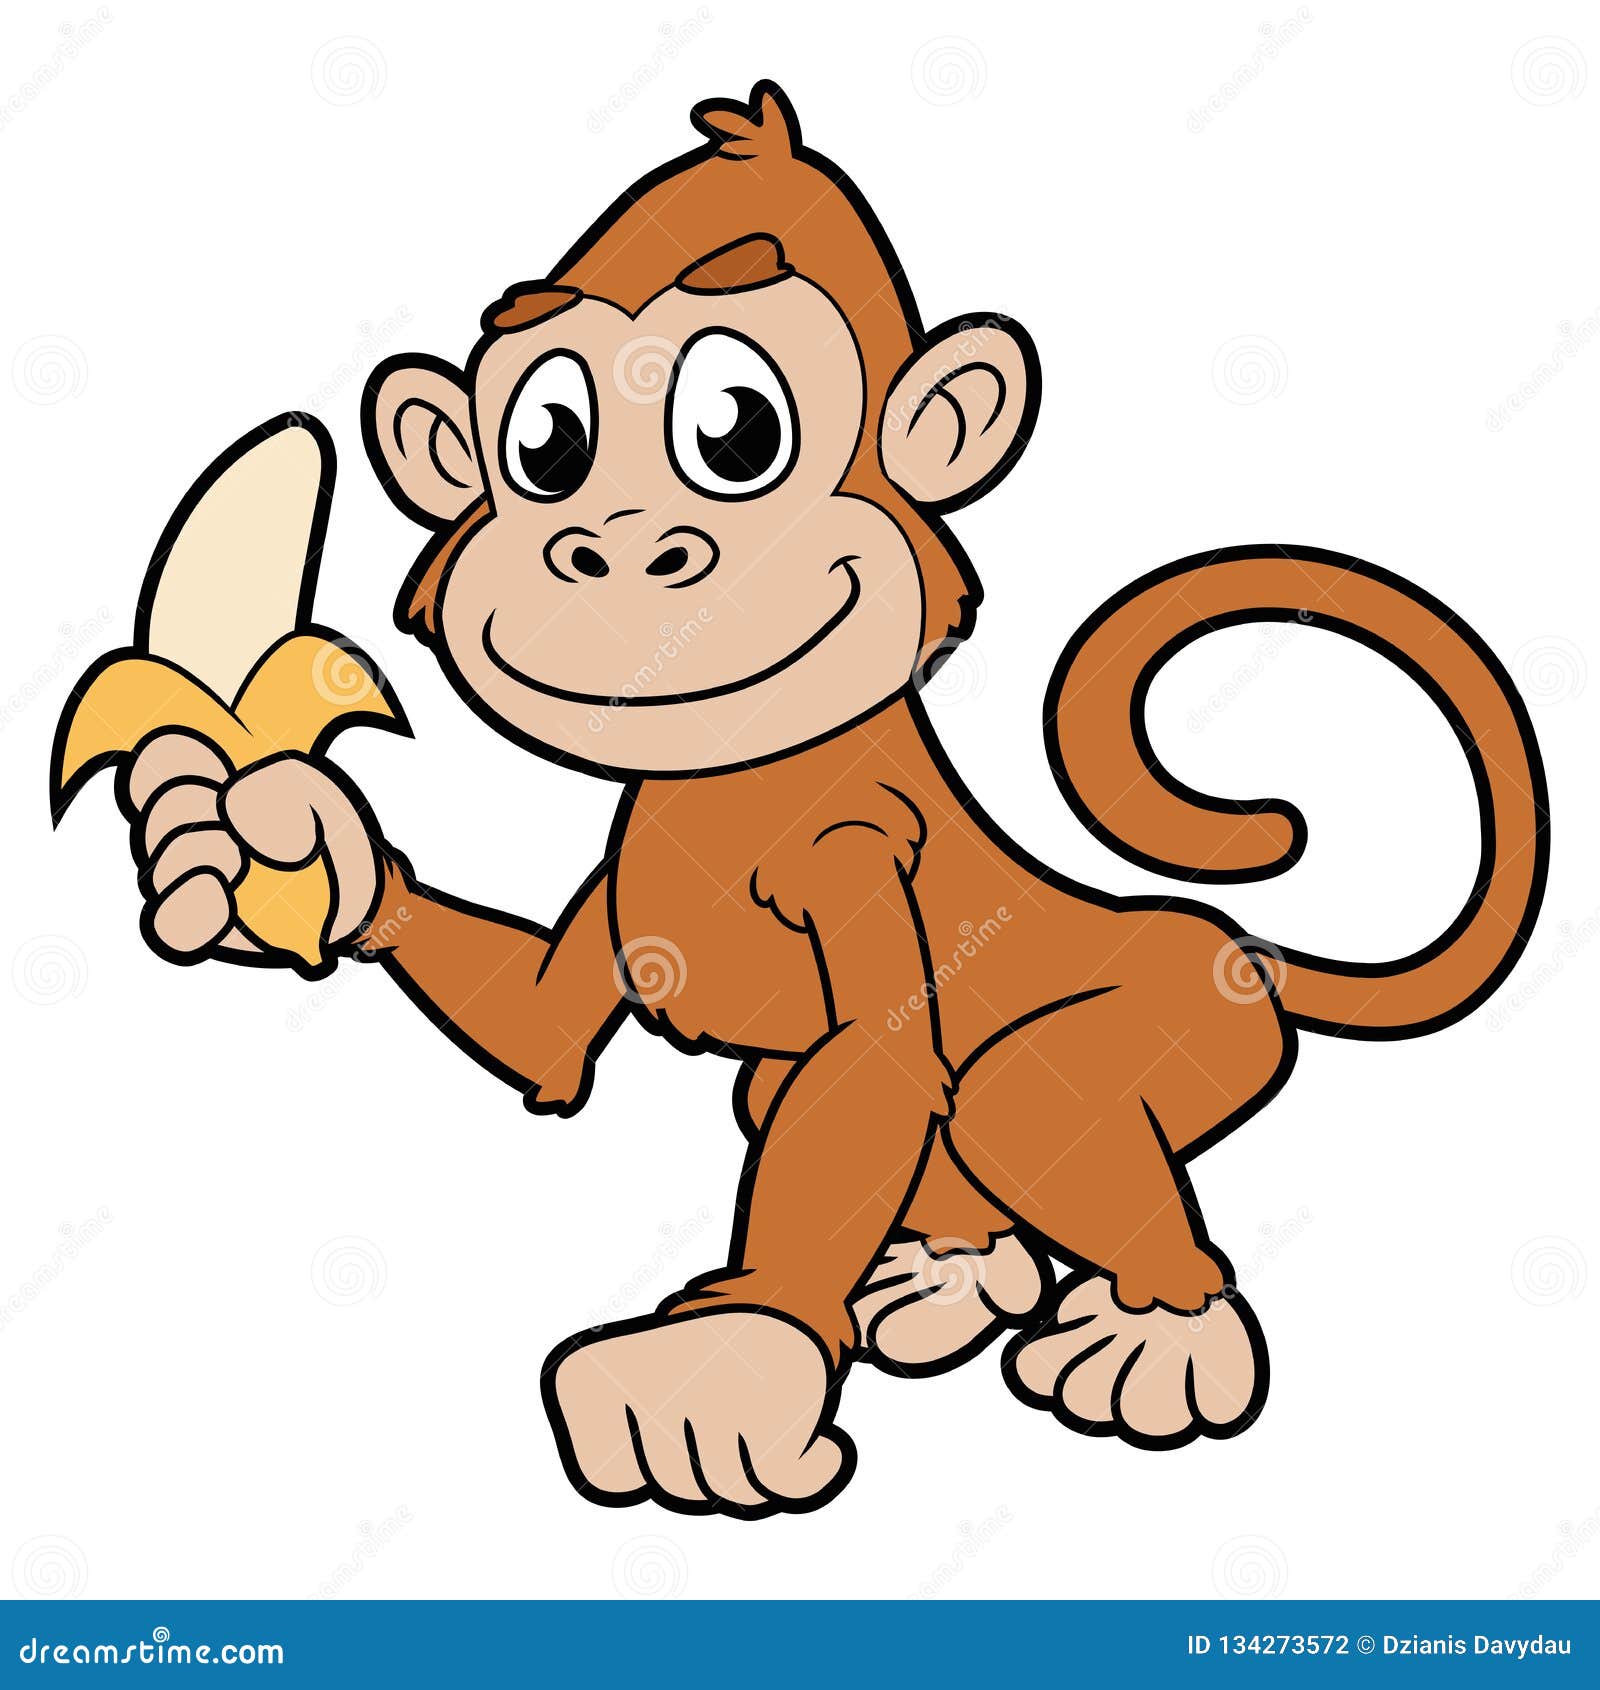 Monkey with banana stock vector. Illustration of cheerful - 134273572